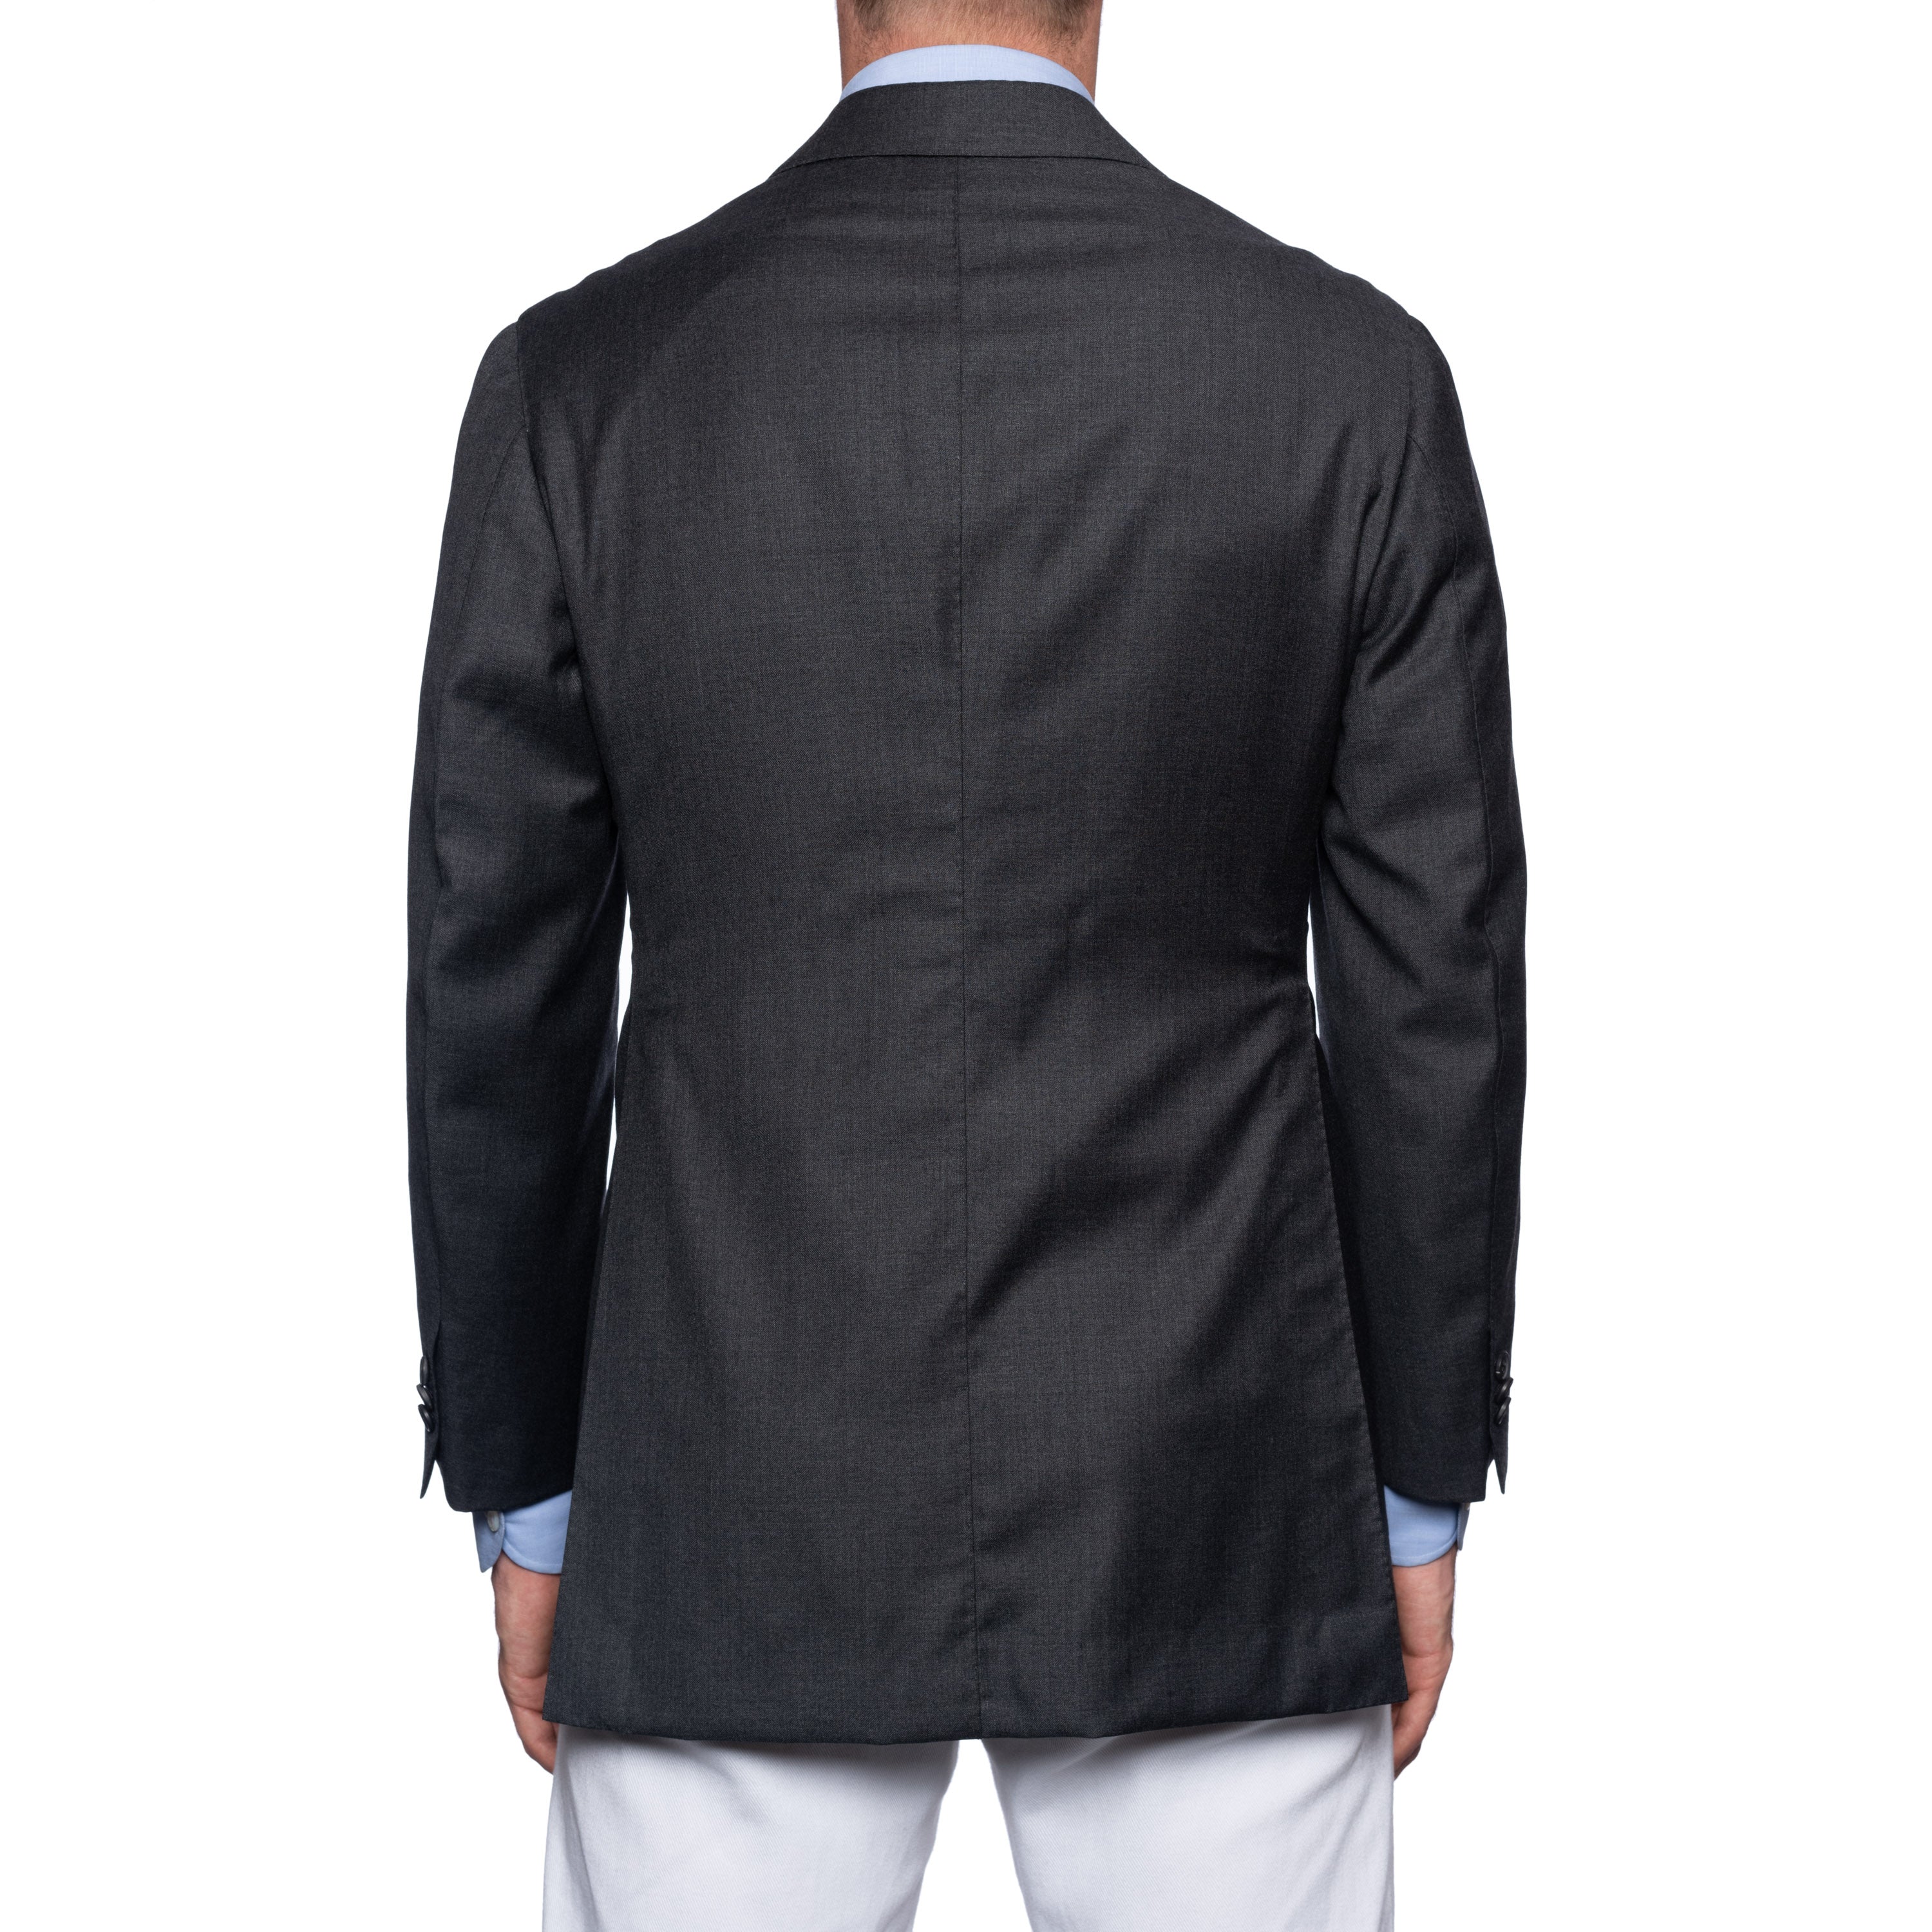 SARTORIA CHIAIA Bespoke Handmade Gray Wool Super 130's Jacket 50 NEW US 40 SARTORIA CHIAIA